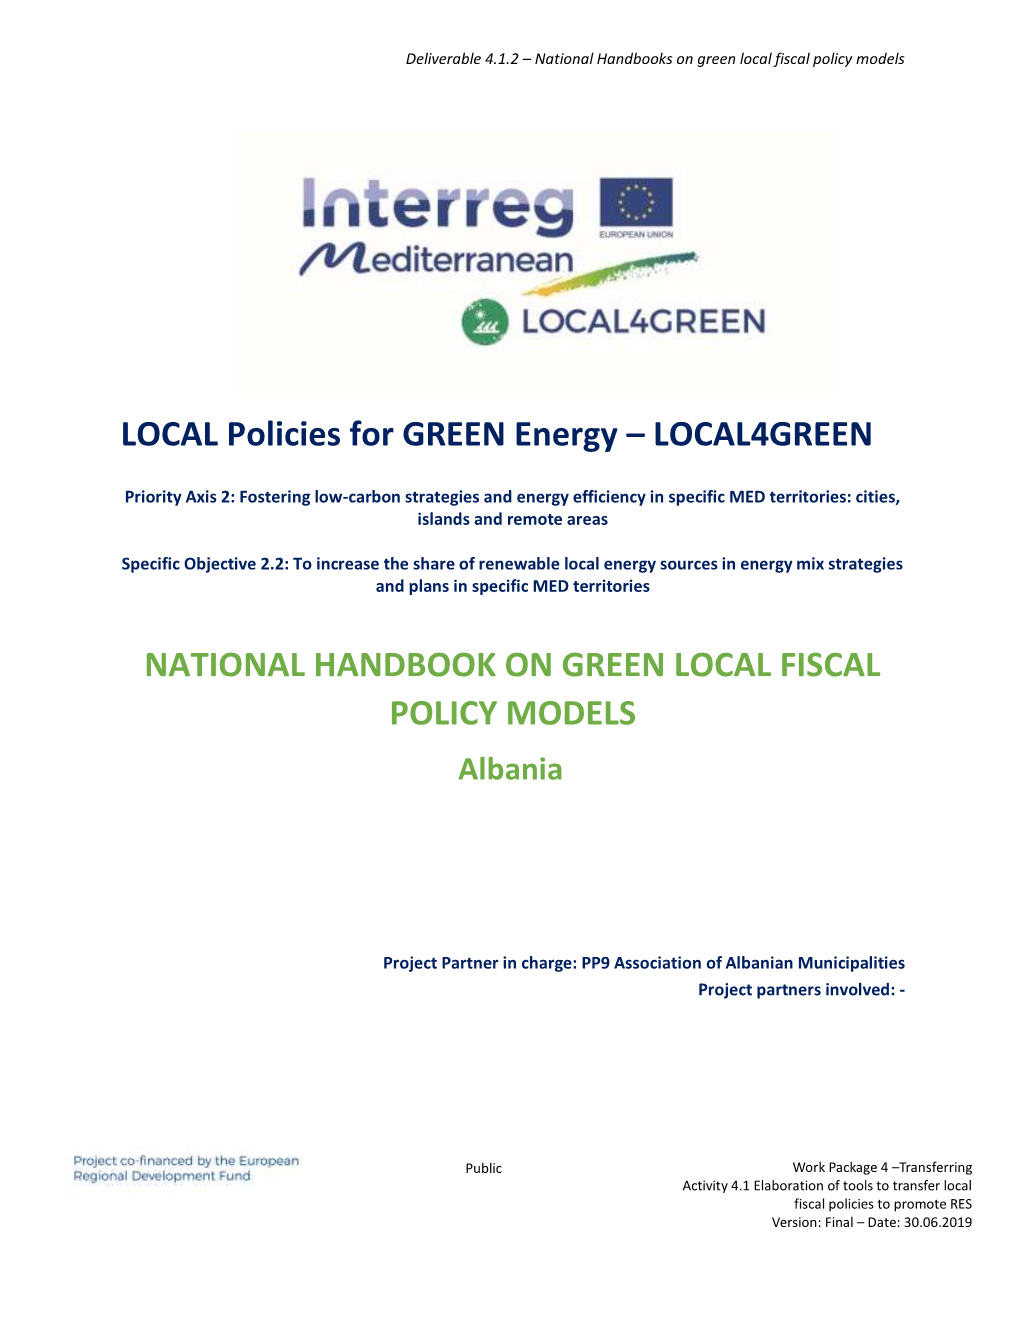 Local4green National Handbook on Green Local